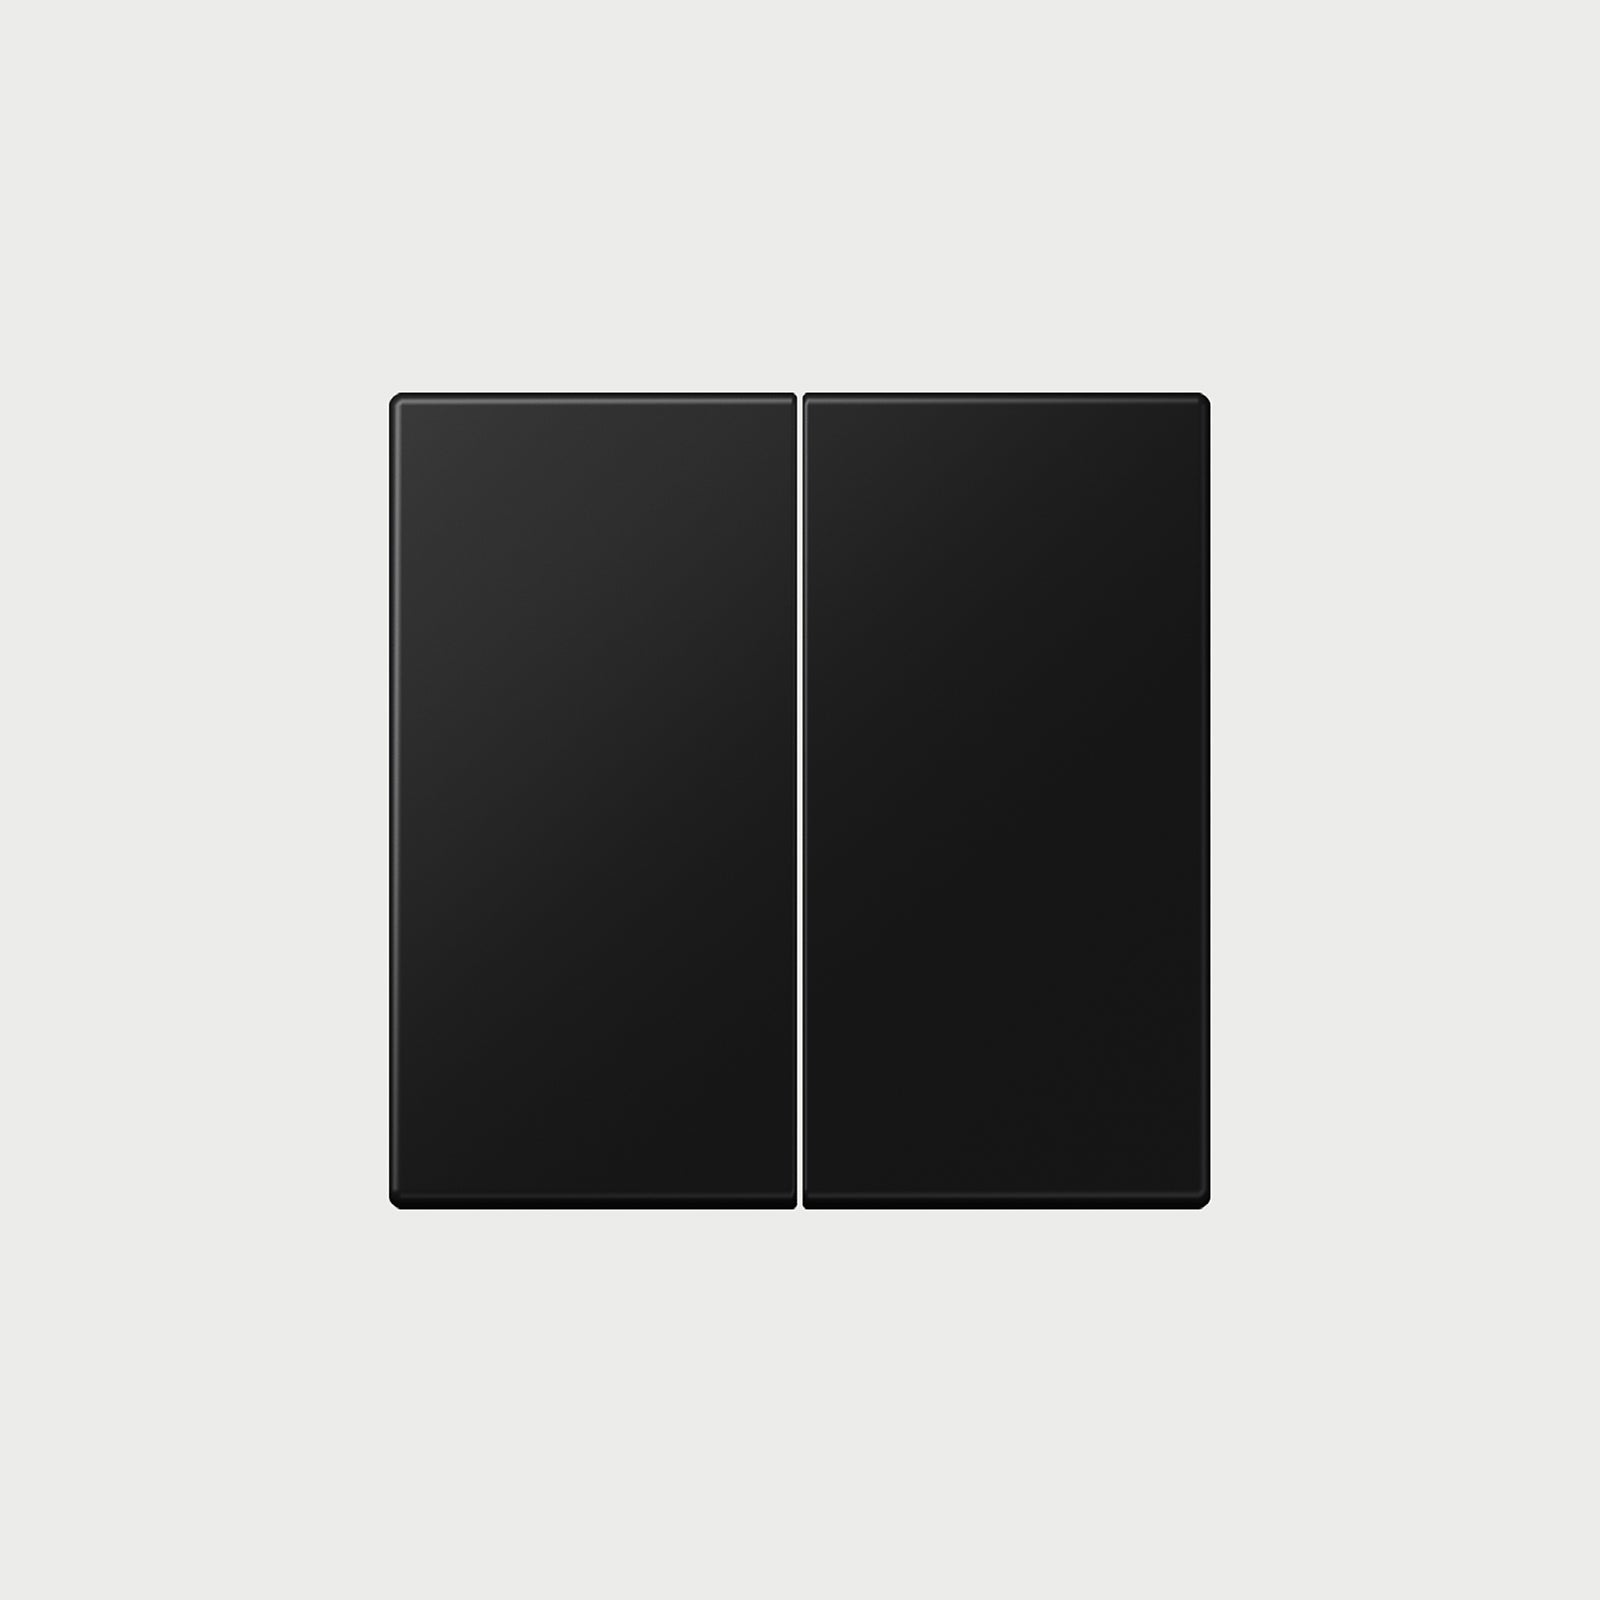 Ls995 (Plastic) Matt Graphite Black Cover